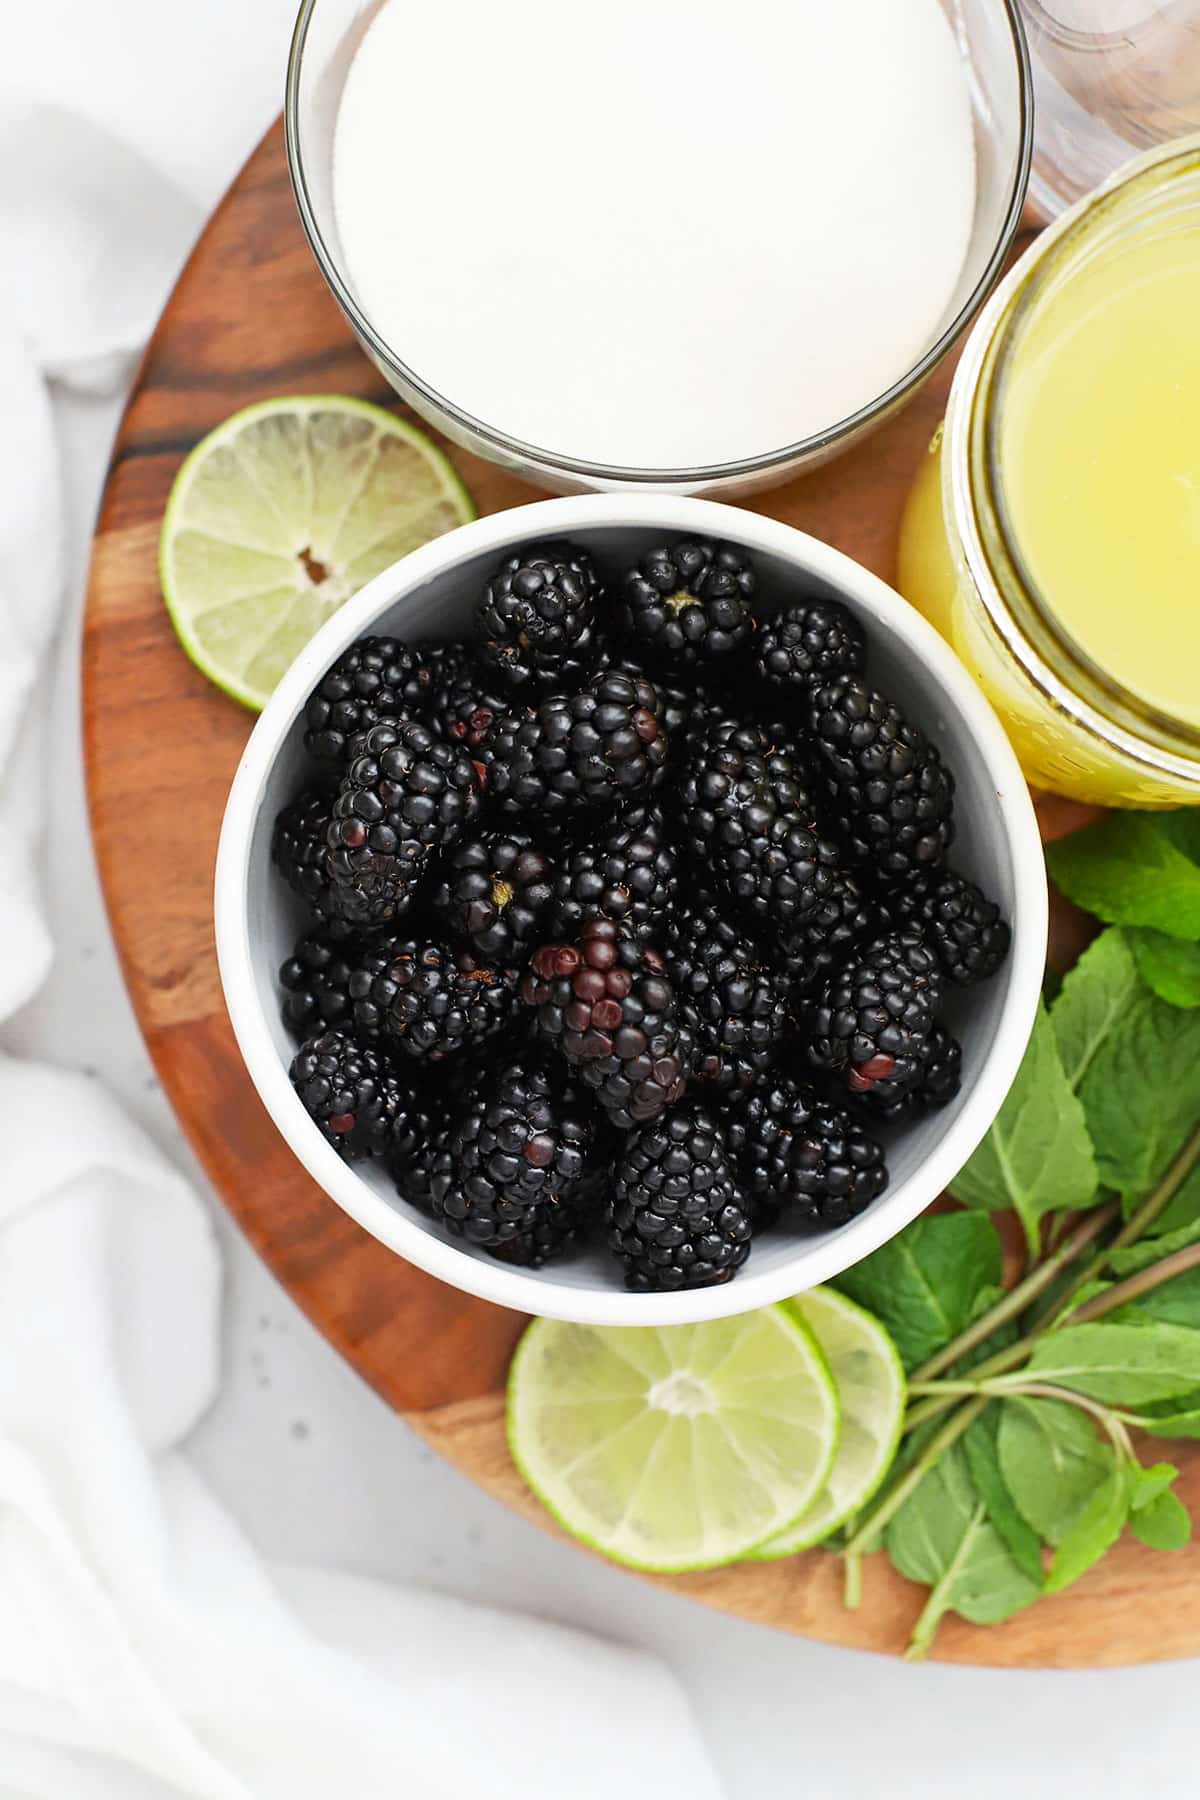 Ingredients for blackberry limeade